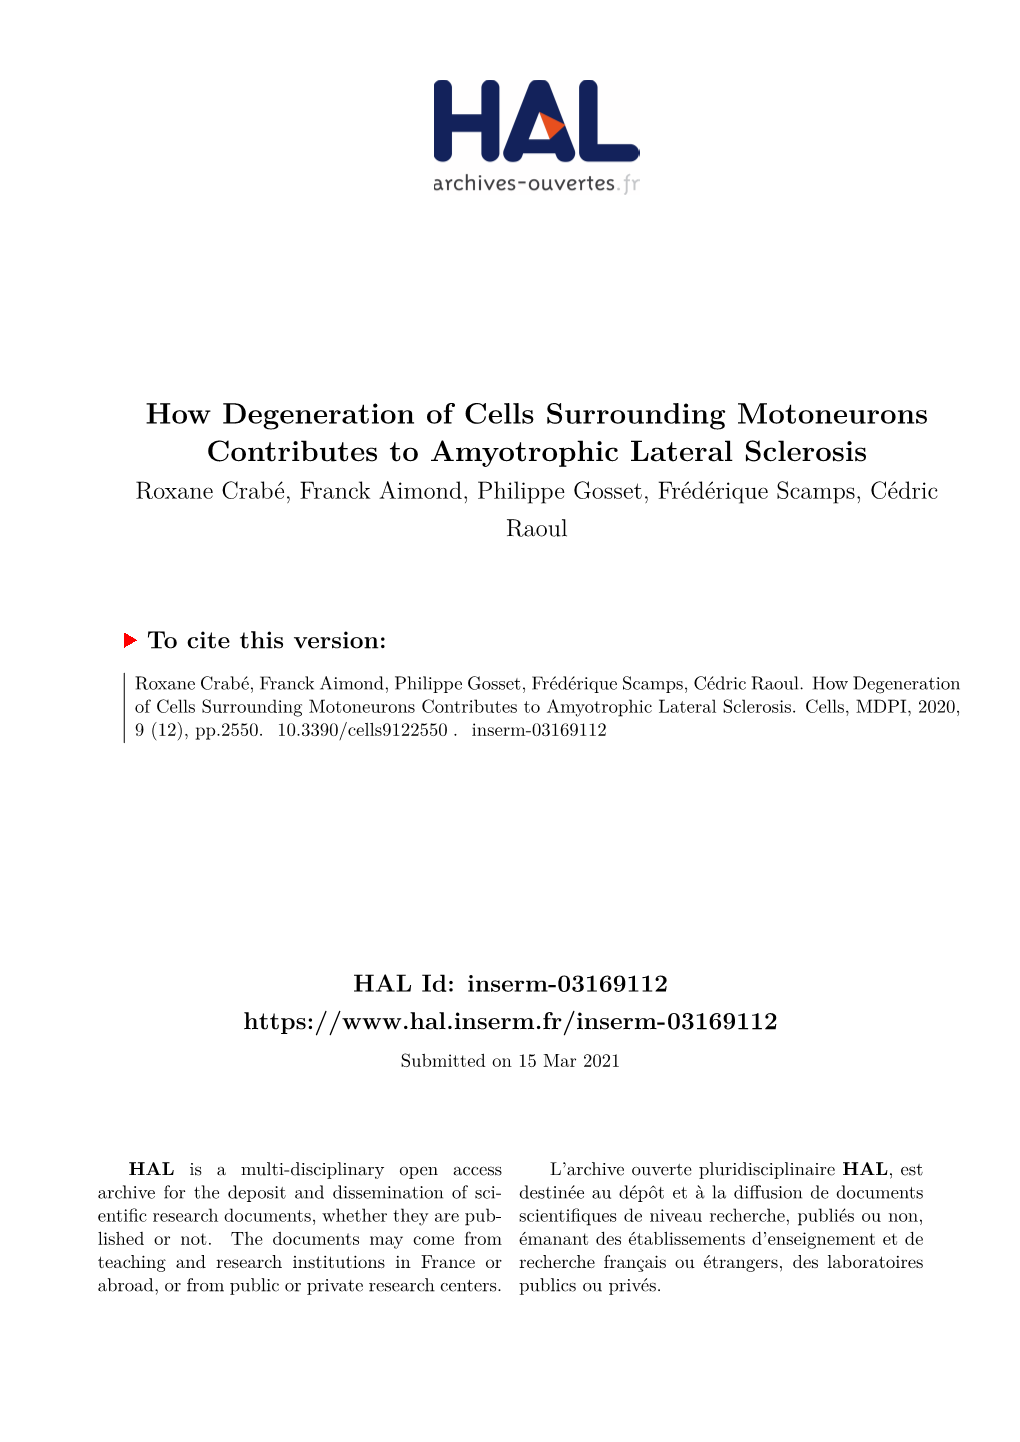 How Degeneration of Cells Surrounding Motoneurons